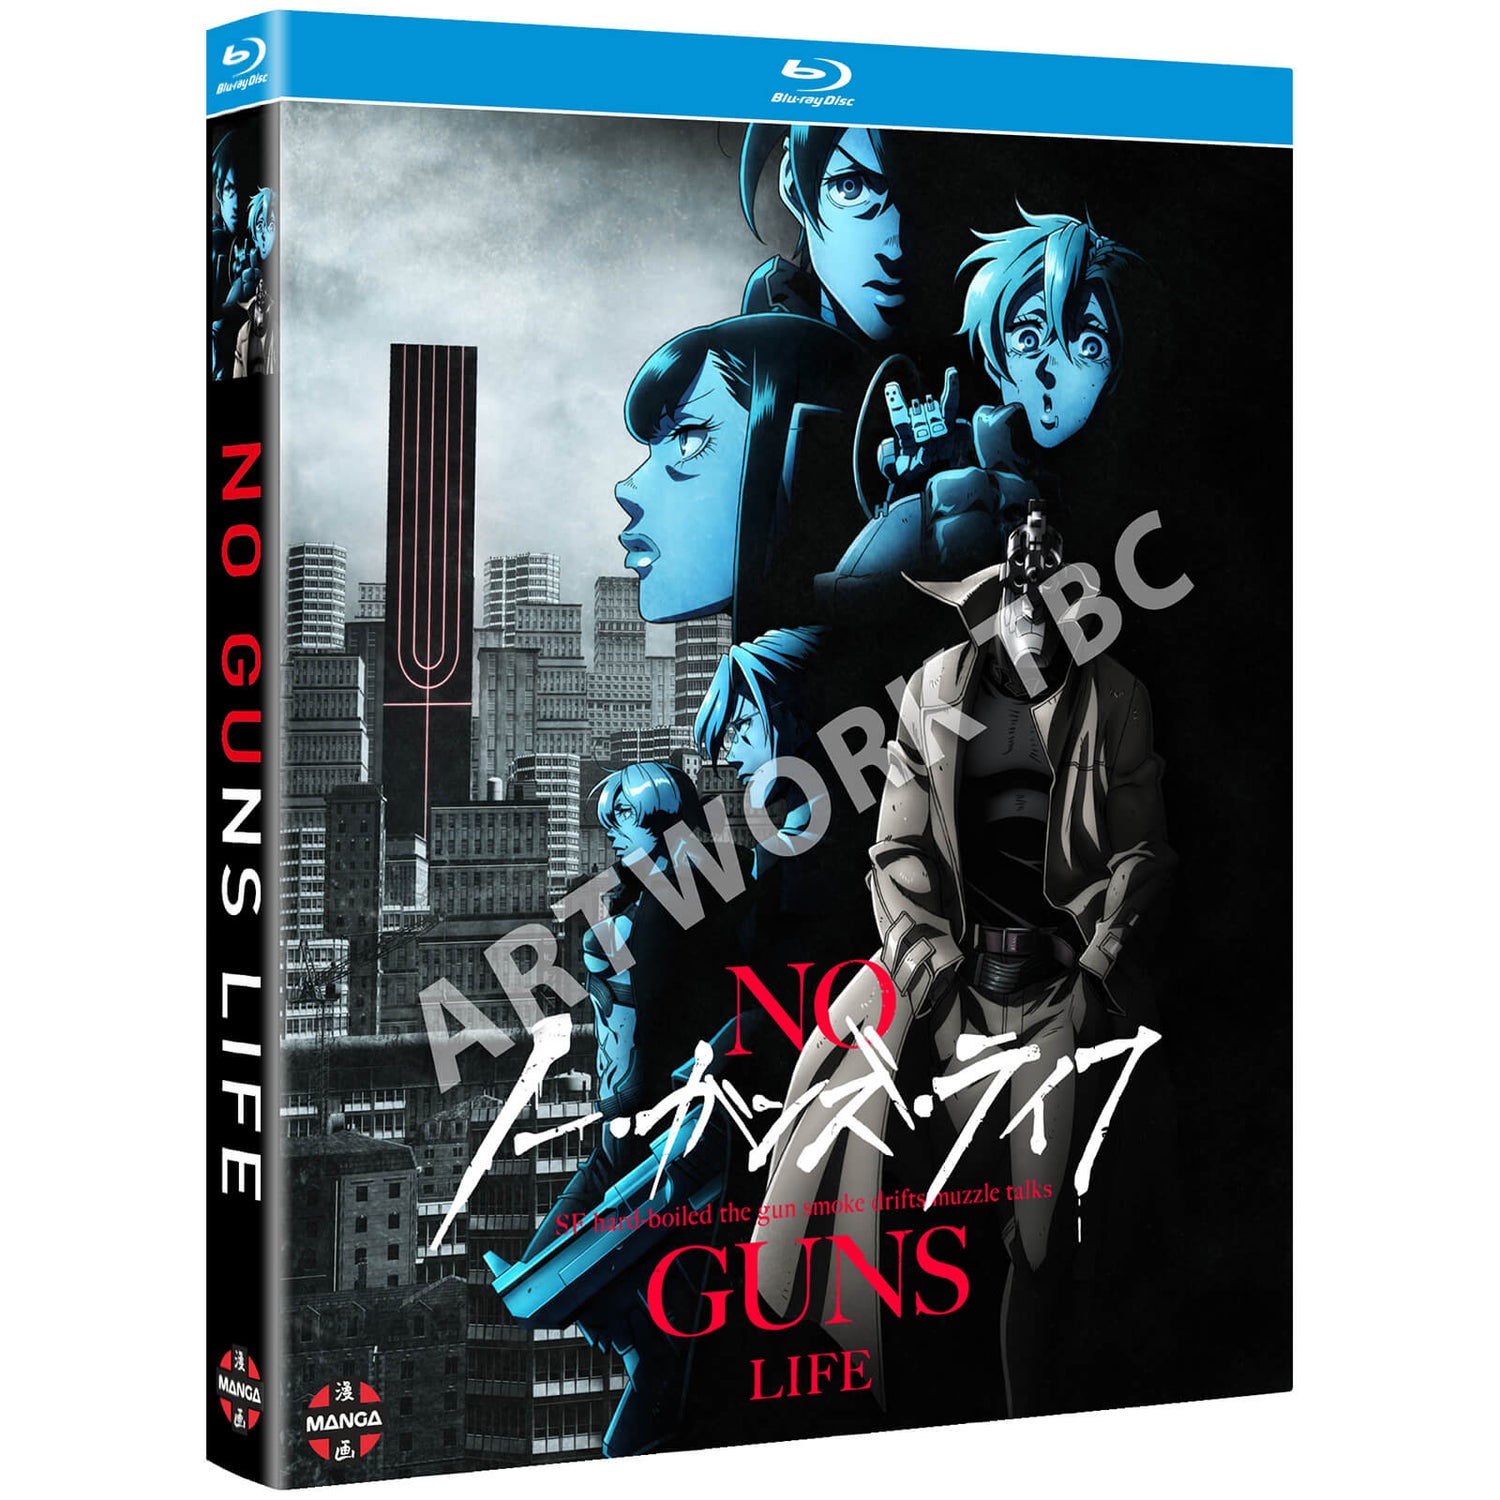 No Guns Life Staffel 2 (Episoden 13-24) Blu-ray + kostenlose digitale Kopie